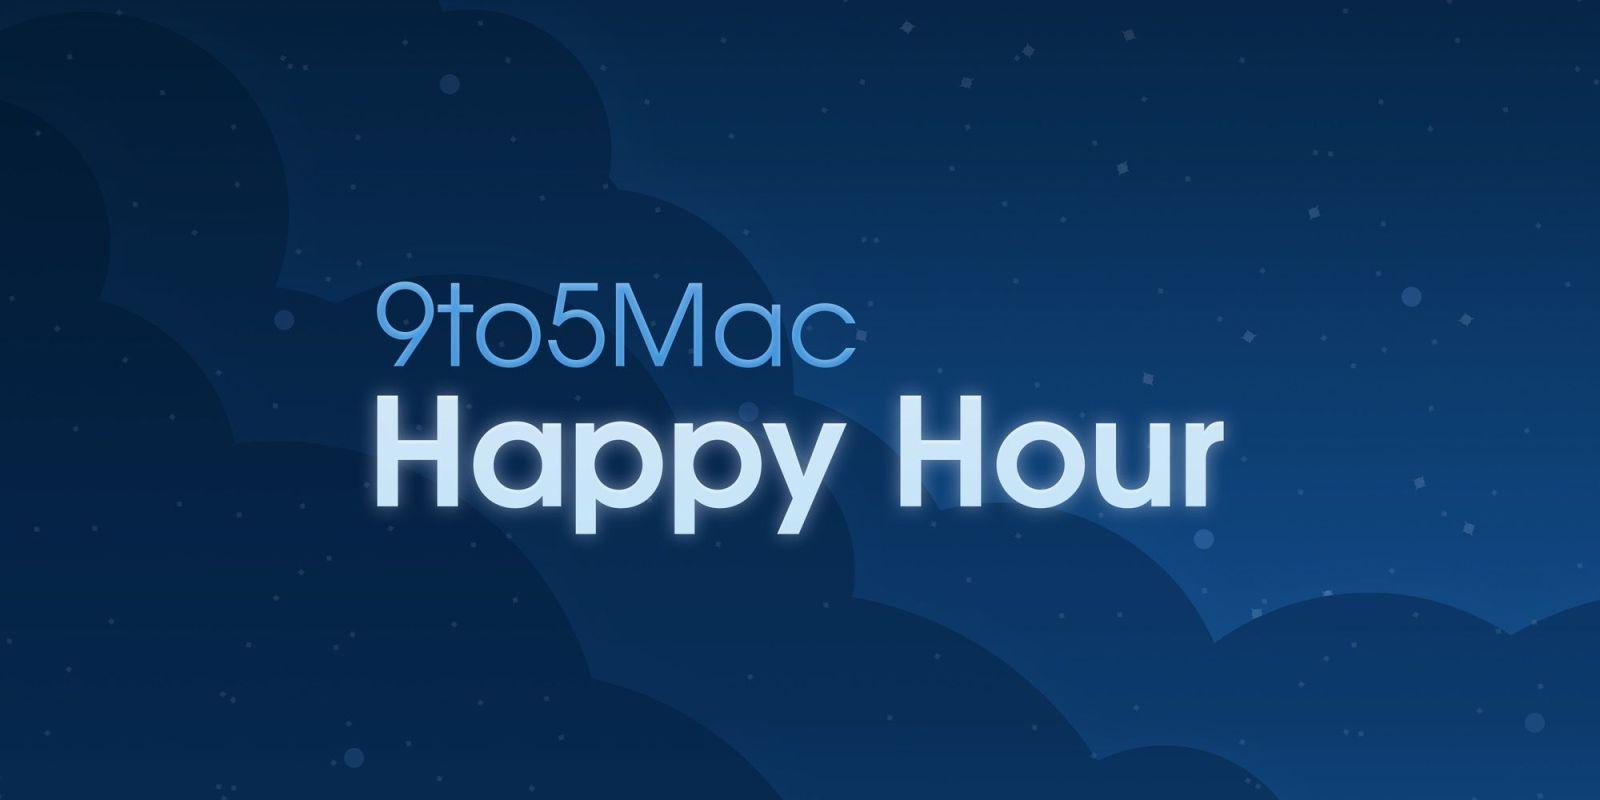 Happy Mac OS Logo - 9to5Mac Happy Hour 182: 2018 MacBook Pro upgrade, thermal throttling ...